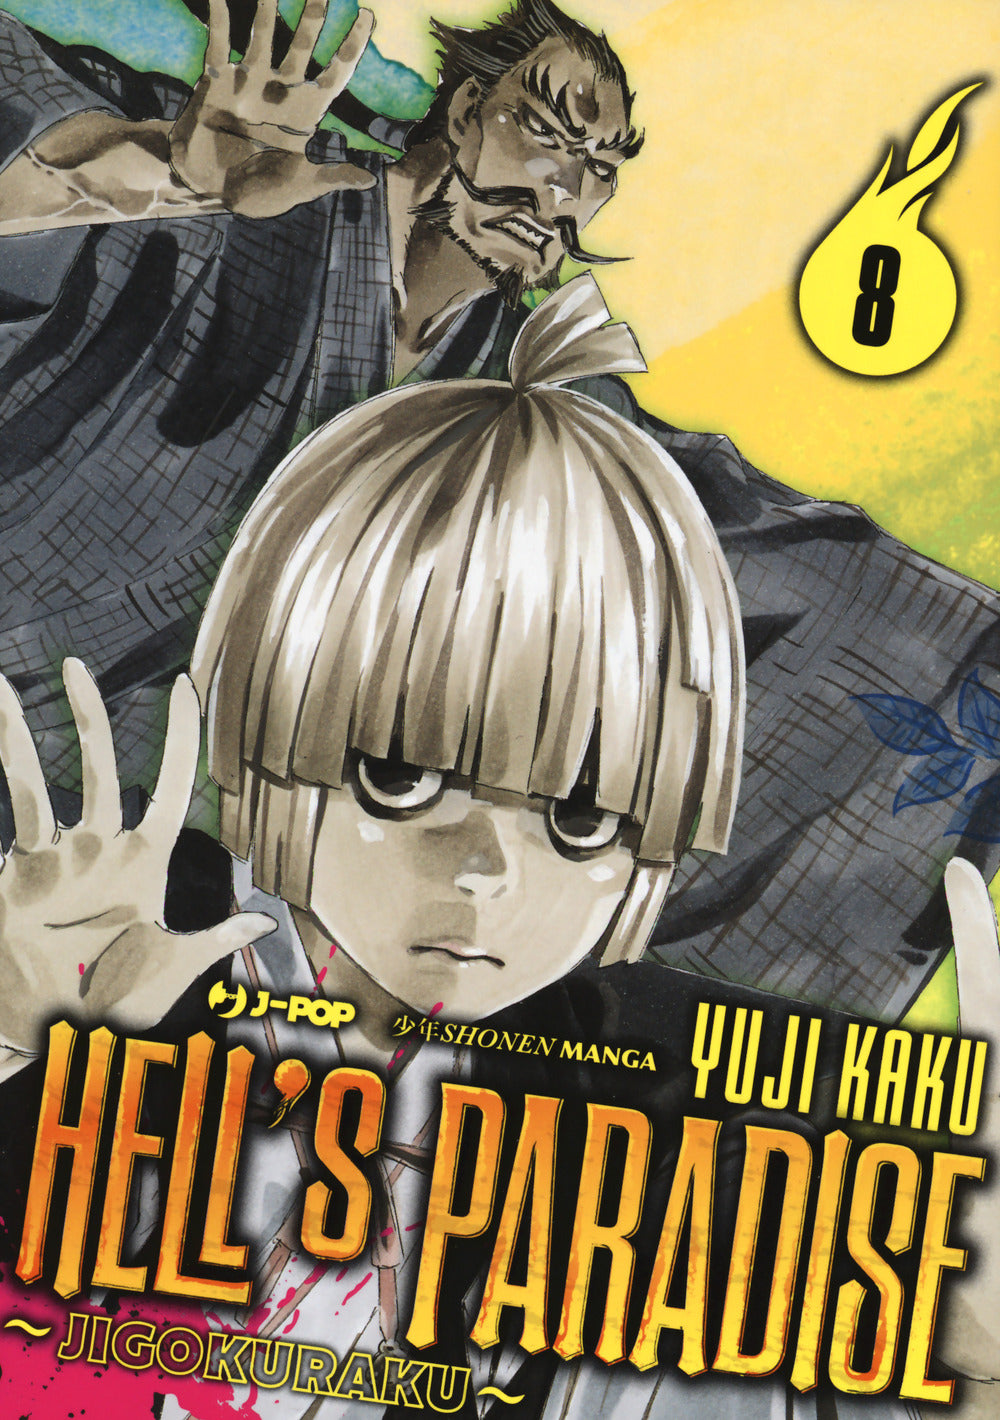 Hell's paradise. Jigokuraku. Vol. 8.